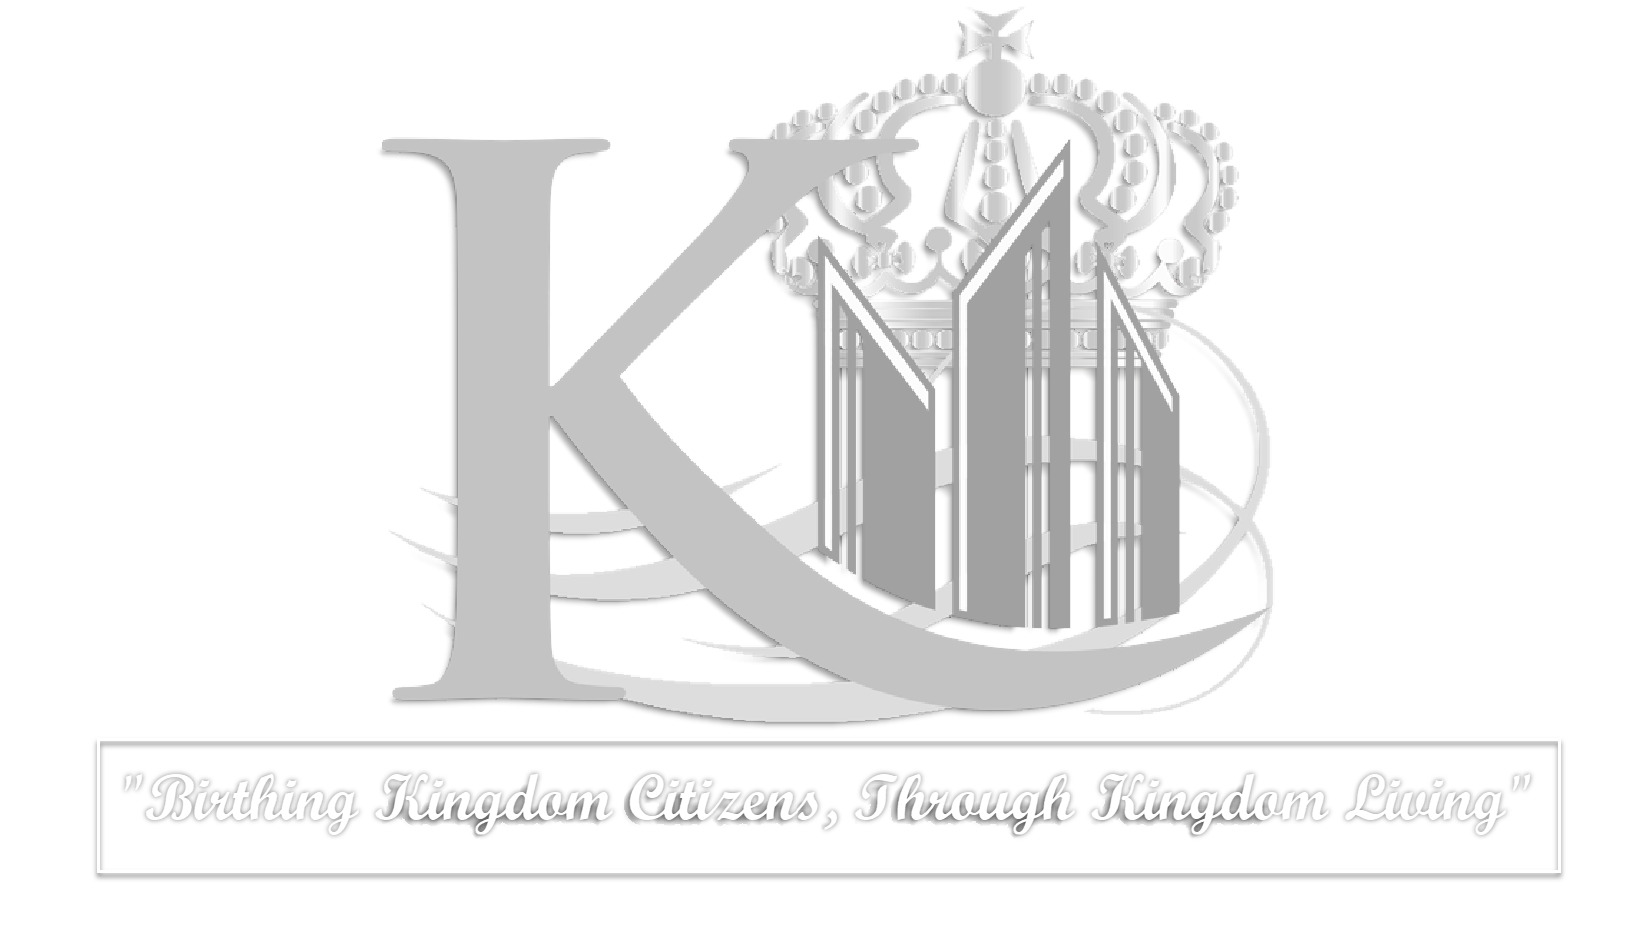 KINGDOM COVENANT CHURCH